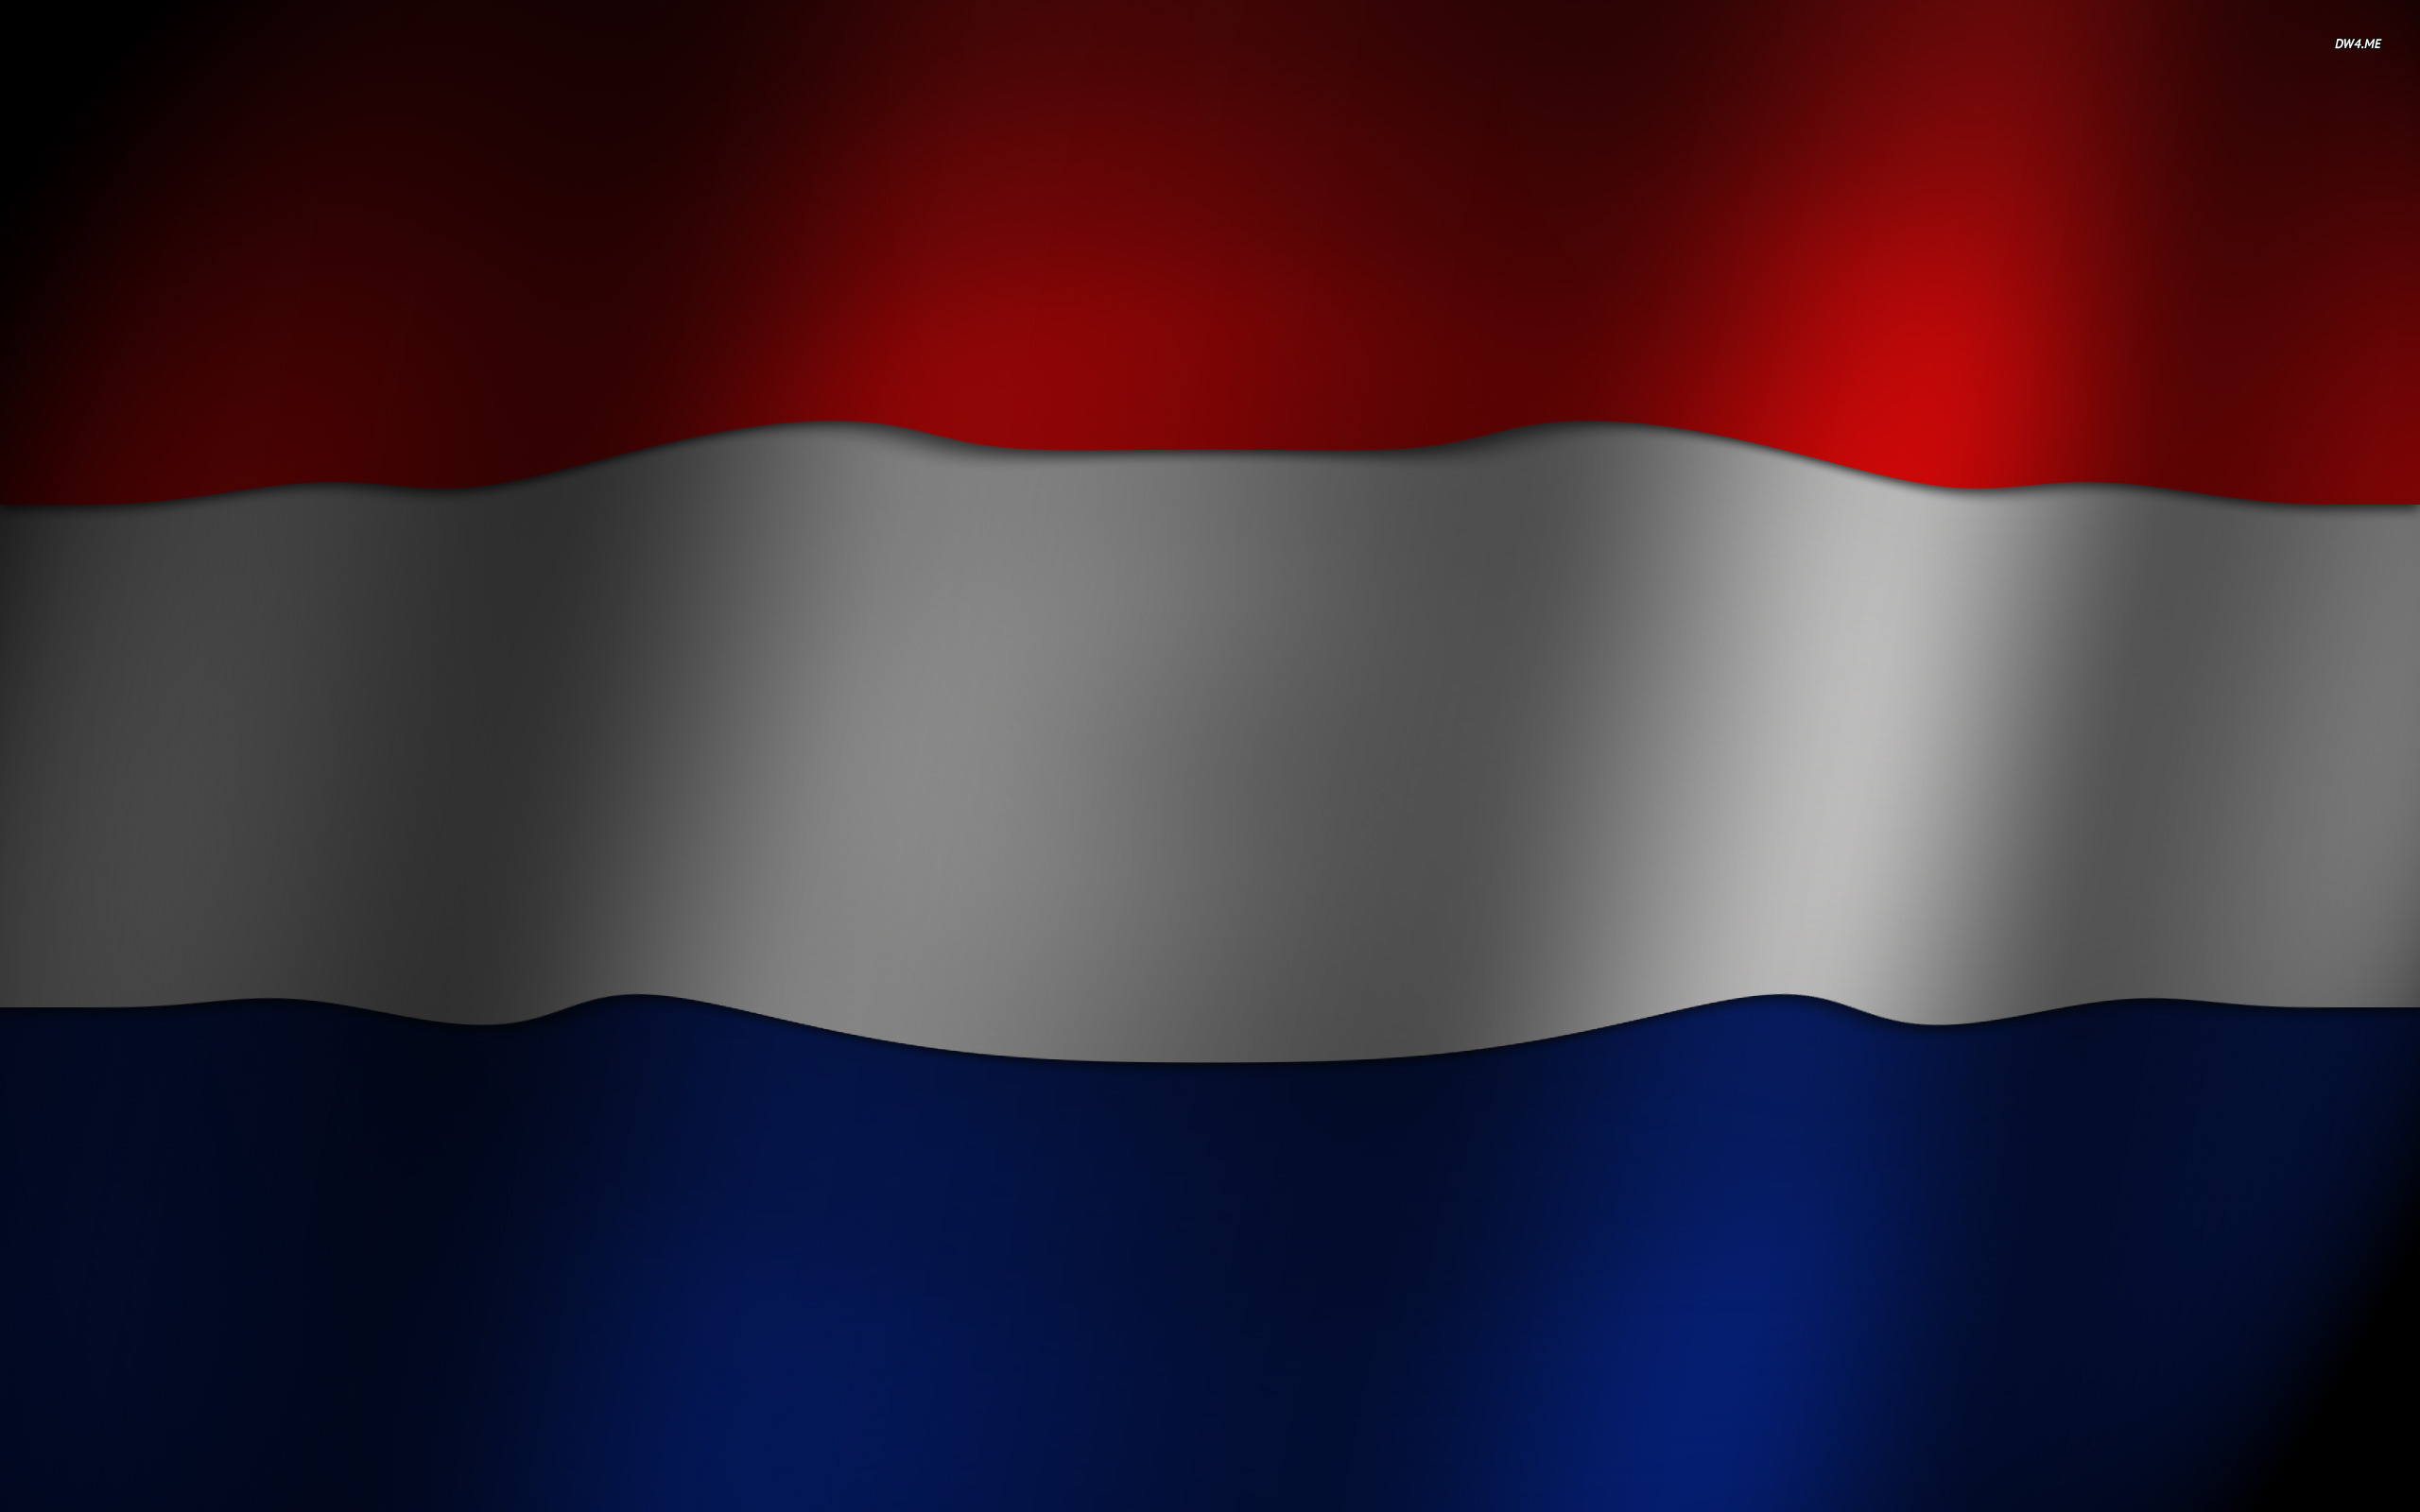 Flag Of Netherlands, Europe, Digital Art Wallpaper. Flag Of Netherlands, Europe, Digital Art